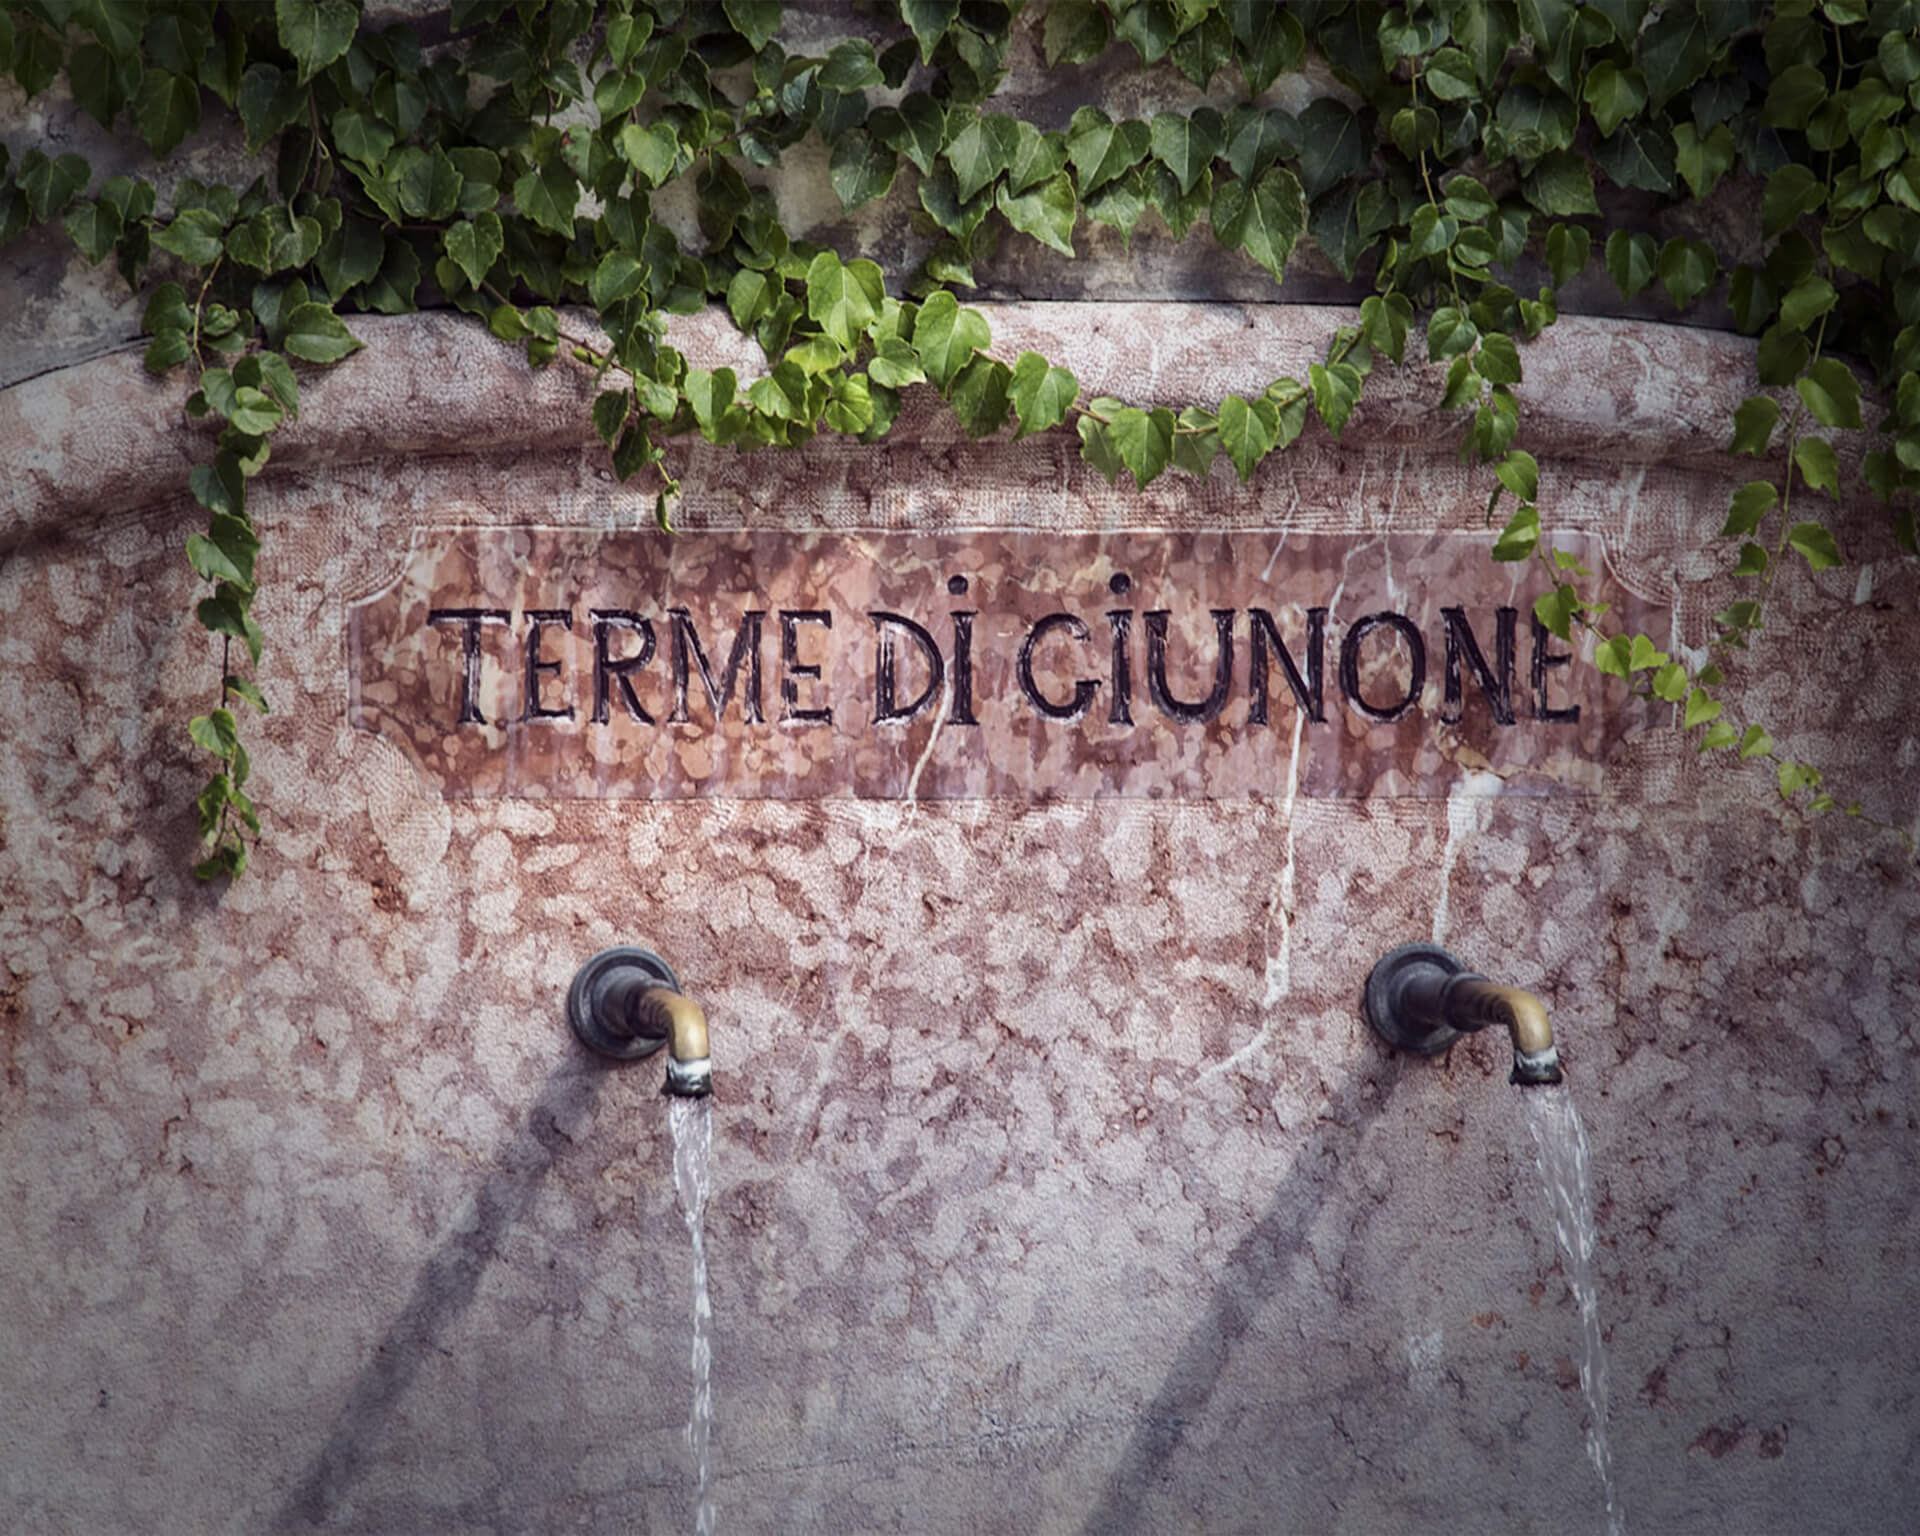 Featured image for “Terme di Giunone”